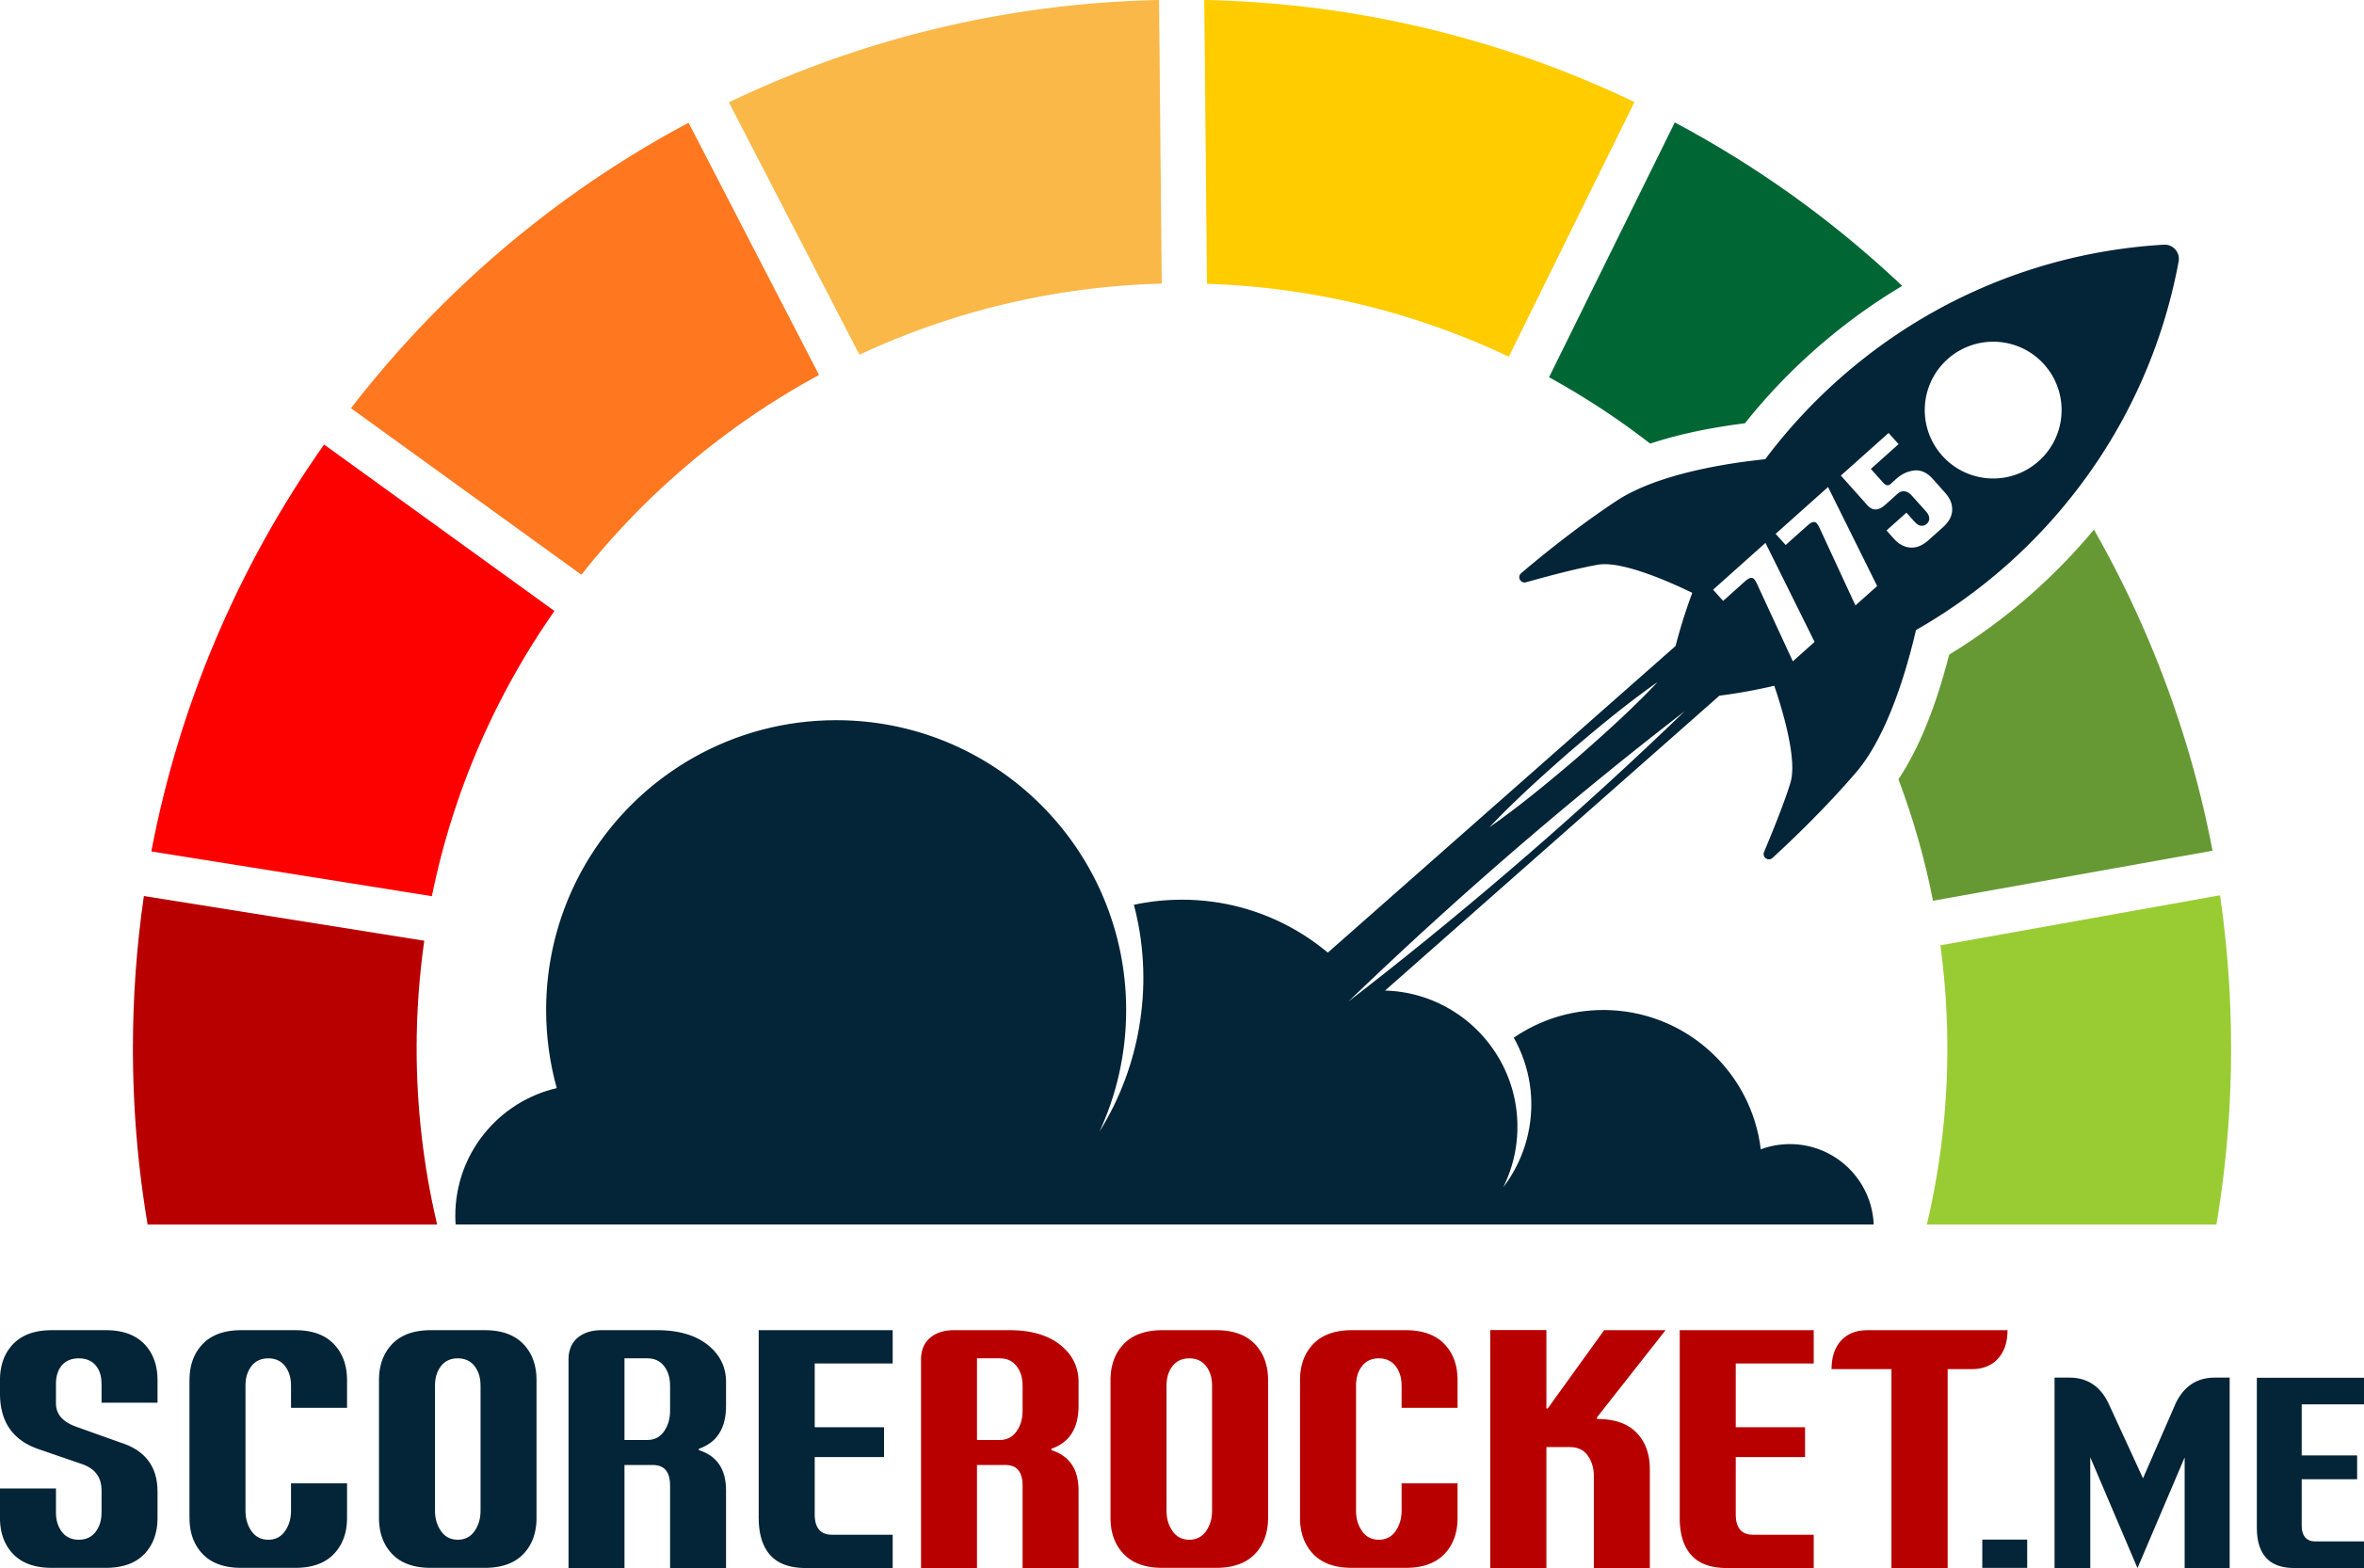 About Score Rocket